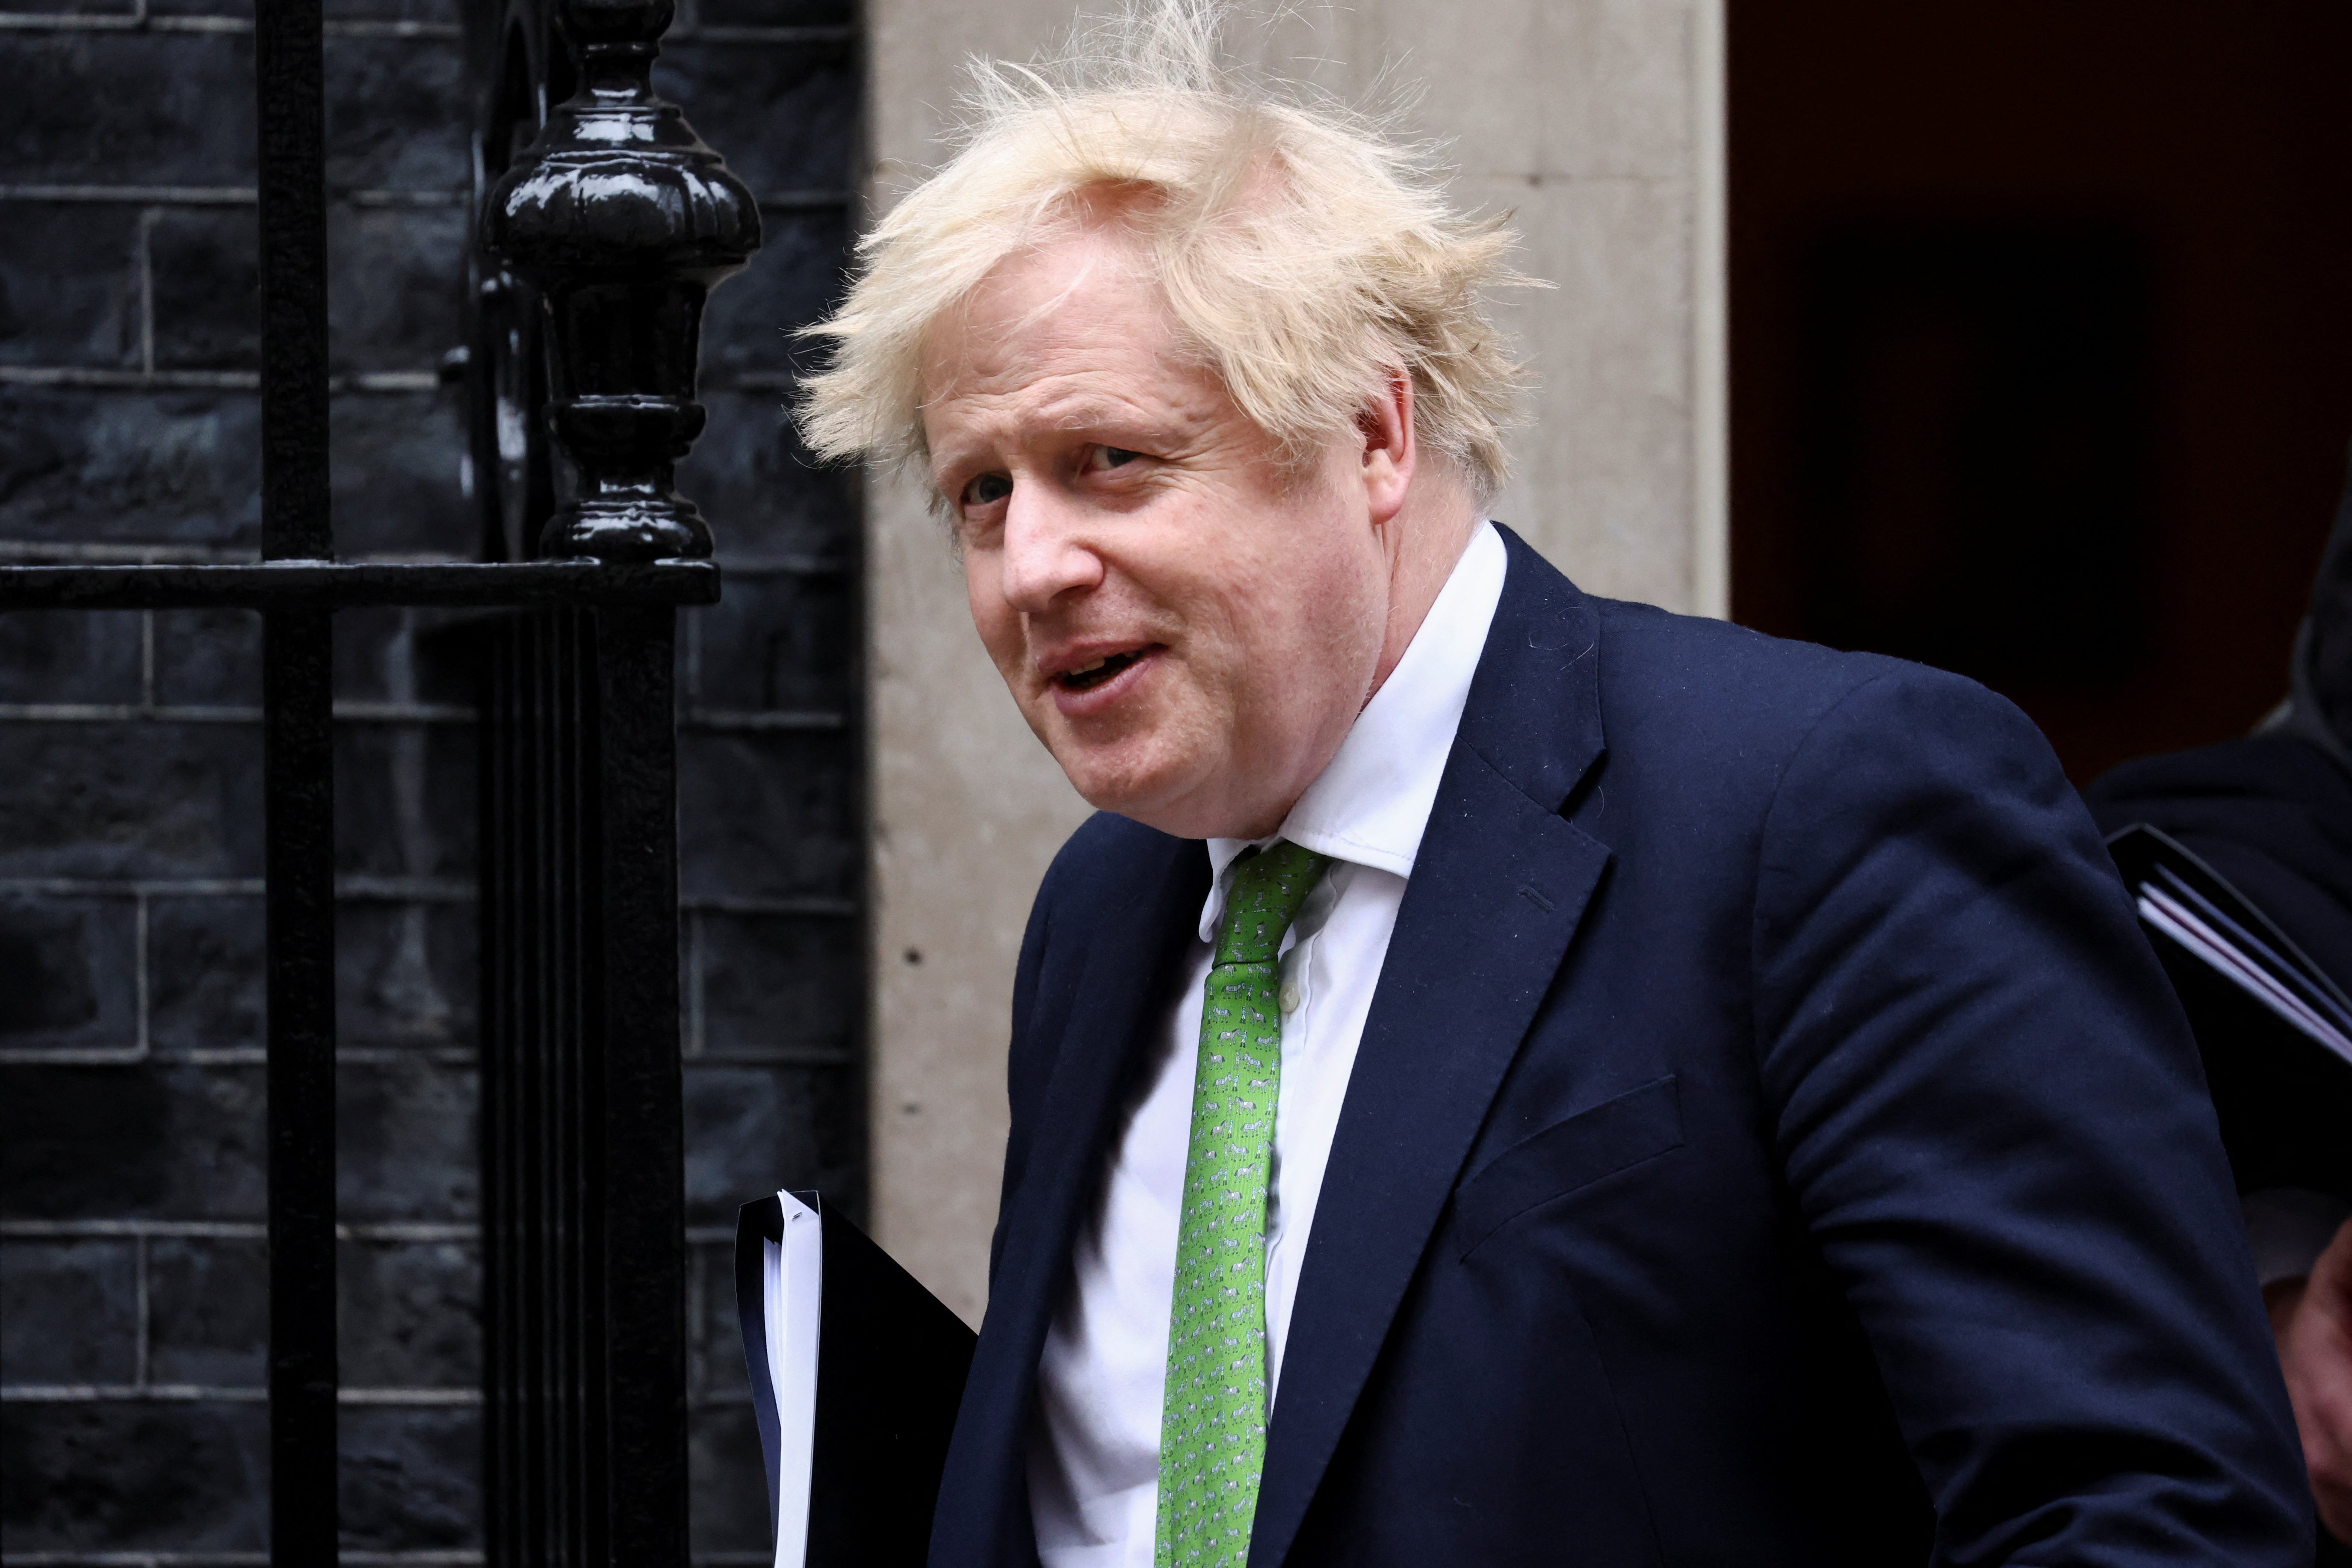 ‘Boris is someone who rewards loyalty,’ said one Tory MP